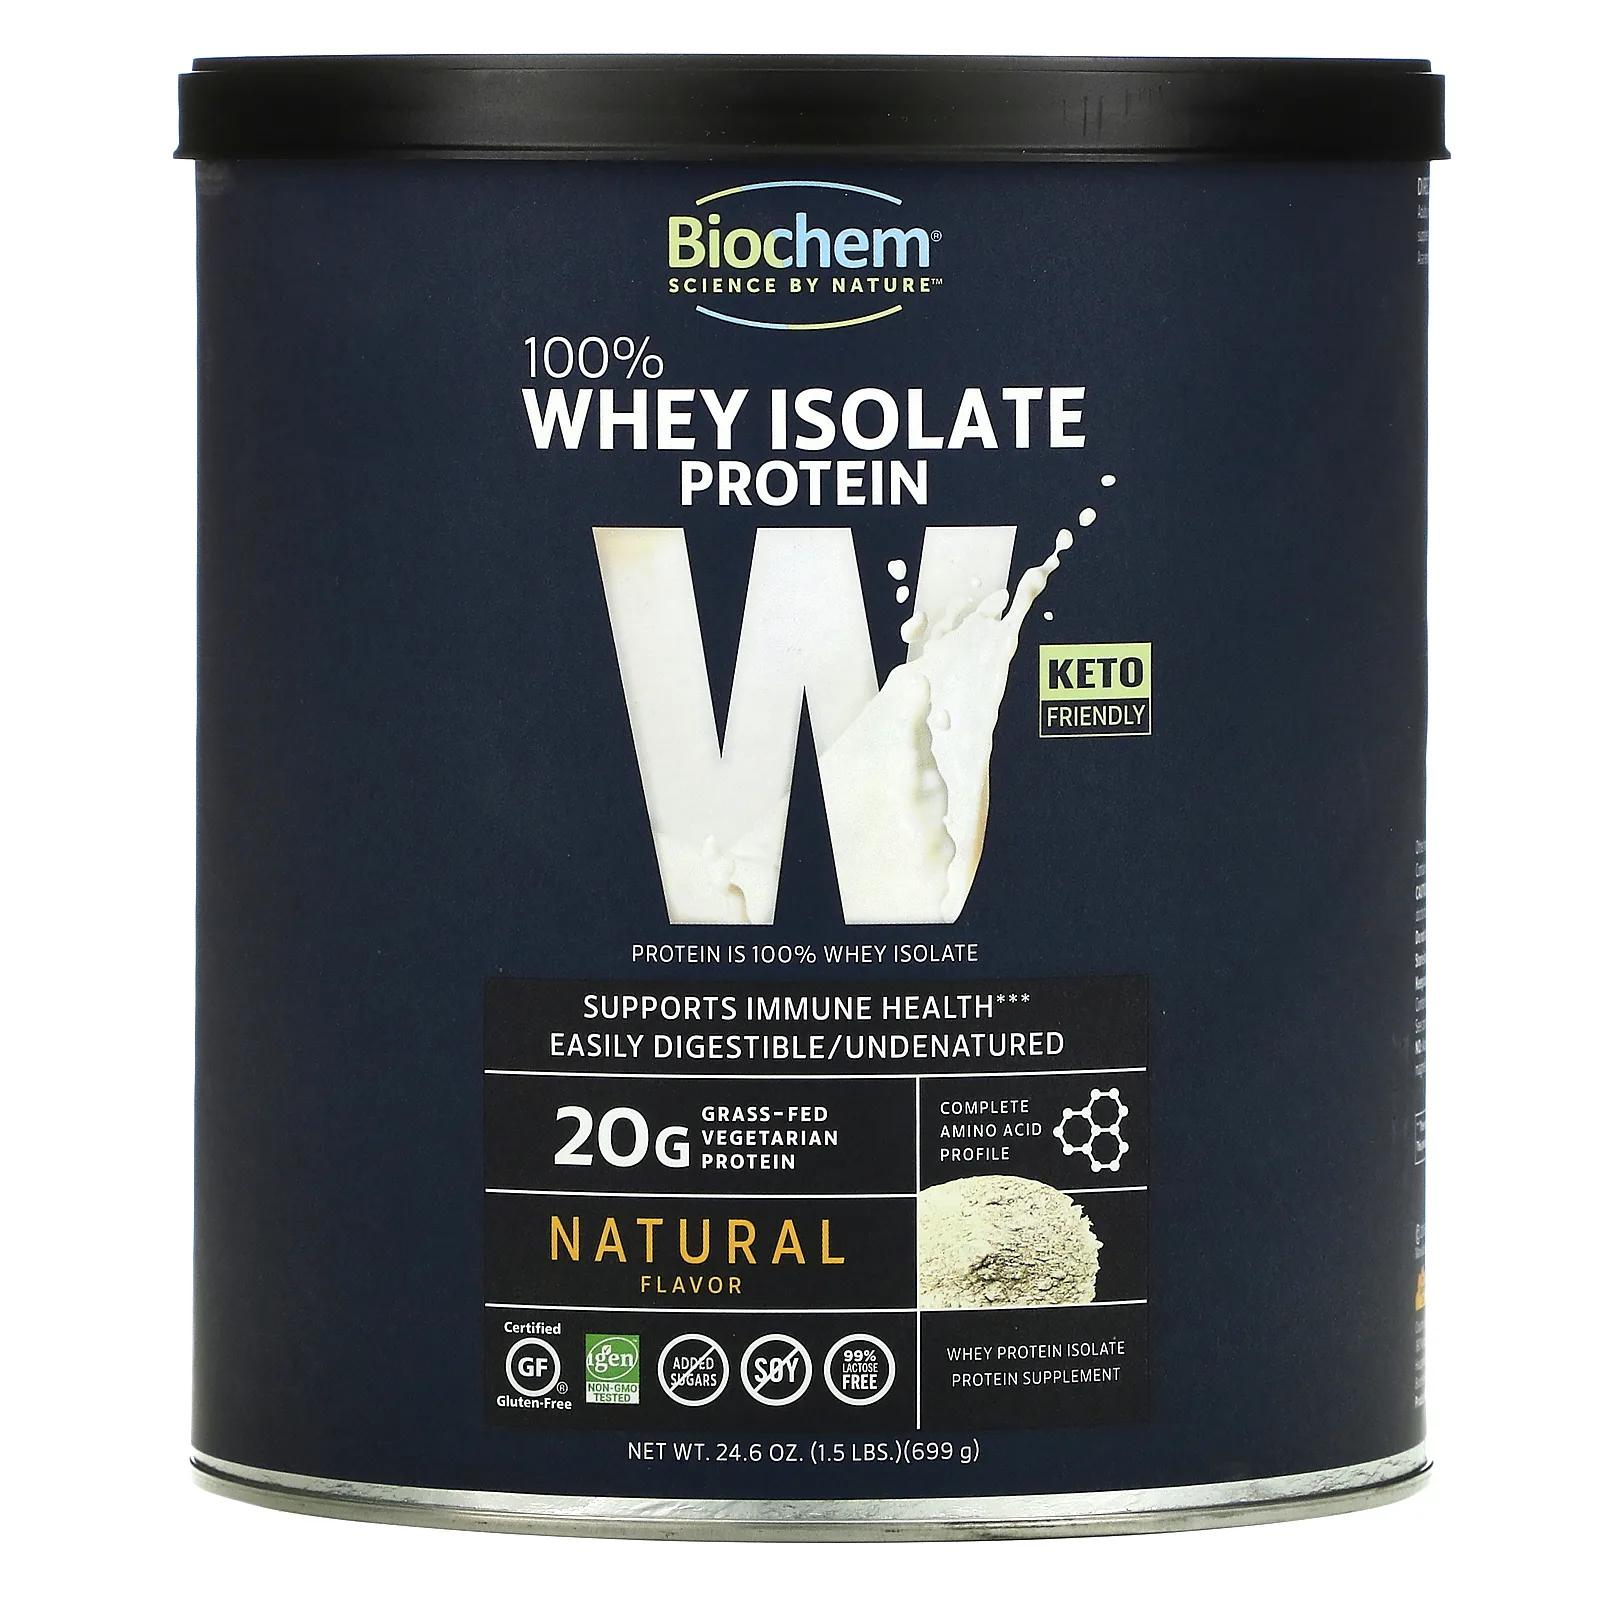 Biochem 100% Whey Isolate Protein Natural Flavor 24.6 oz (699 g) biochem 100% whey isolate protein vanilla 30 2 oz 857 g